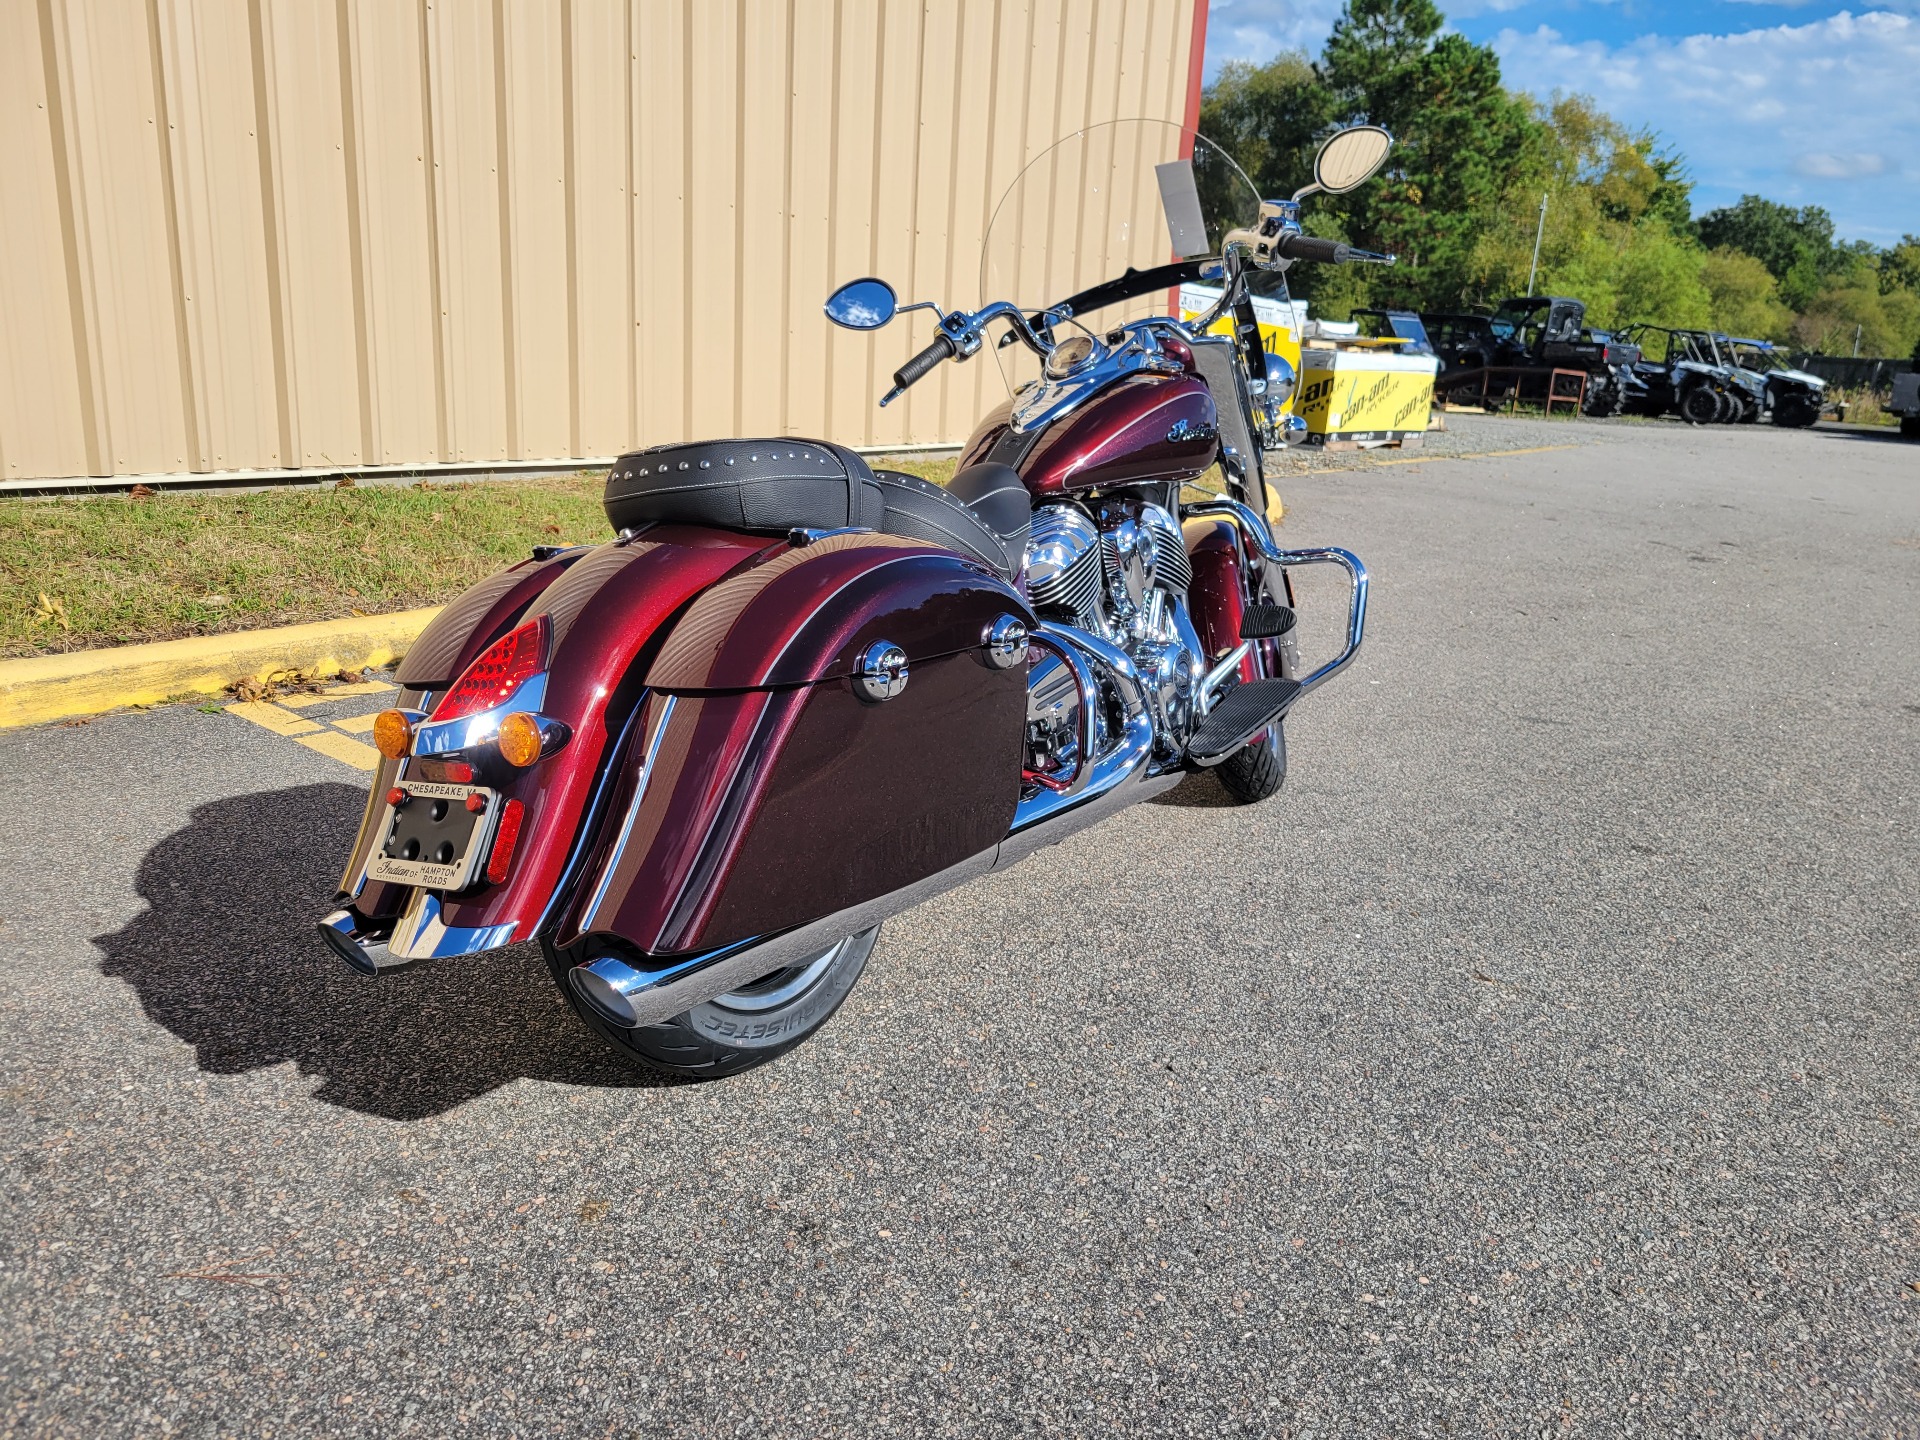 2022 Indian Motorcycle Springfield® in Chesapeake, Virginia - Photo 6